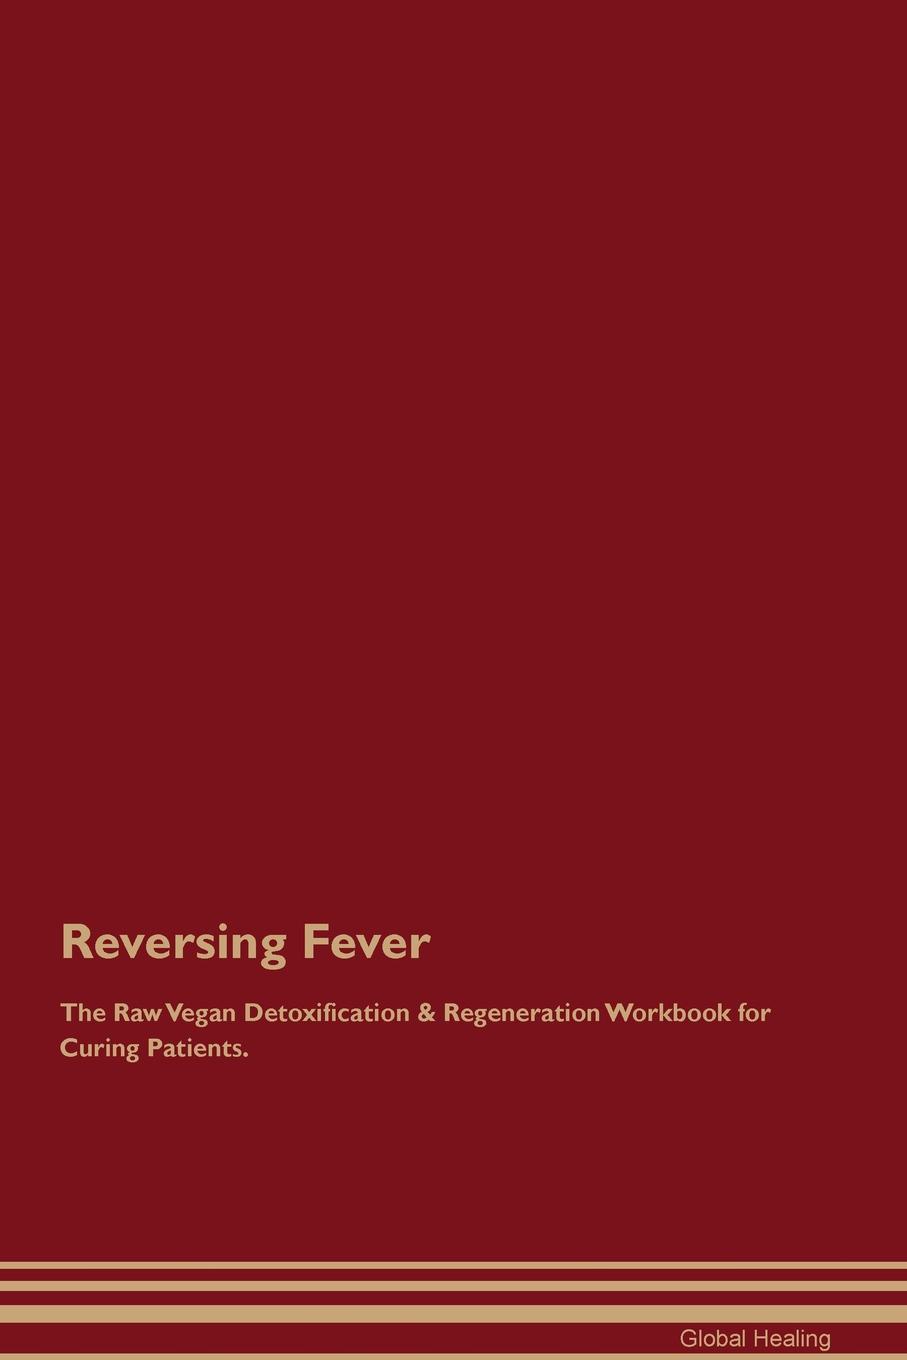 Reversing Fever The Raw Vegan Detoxification & Regeneration Workbook for Curing Patients